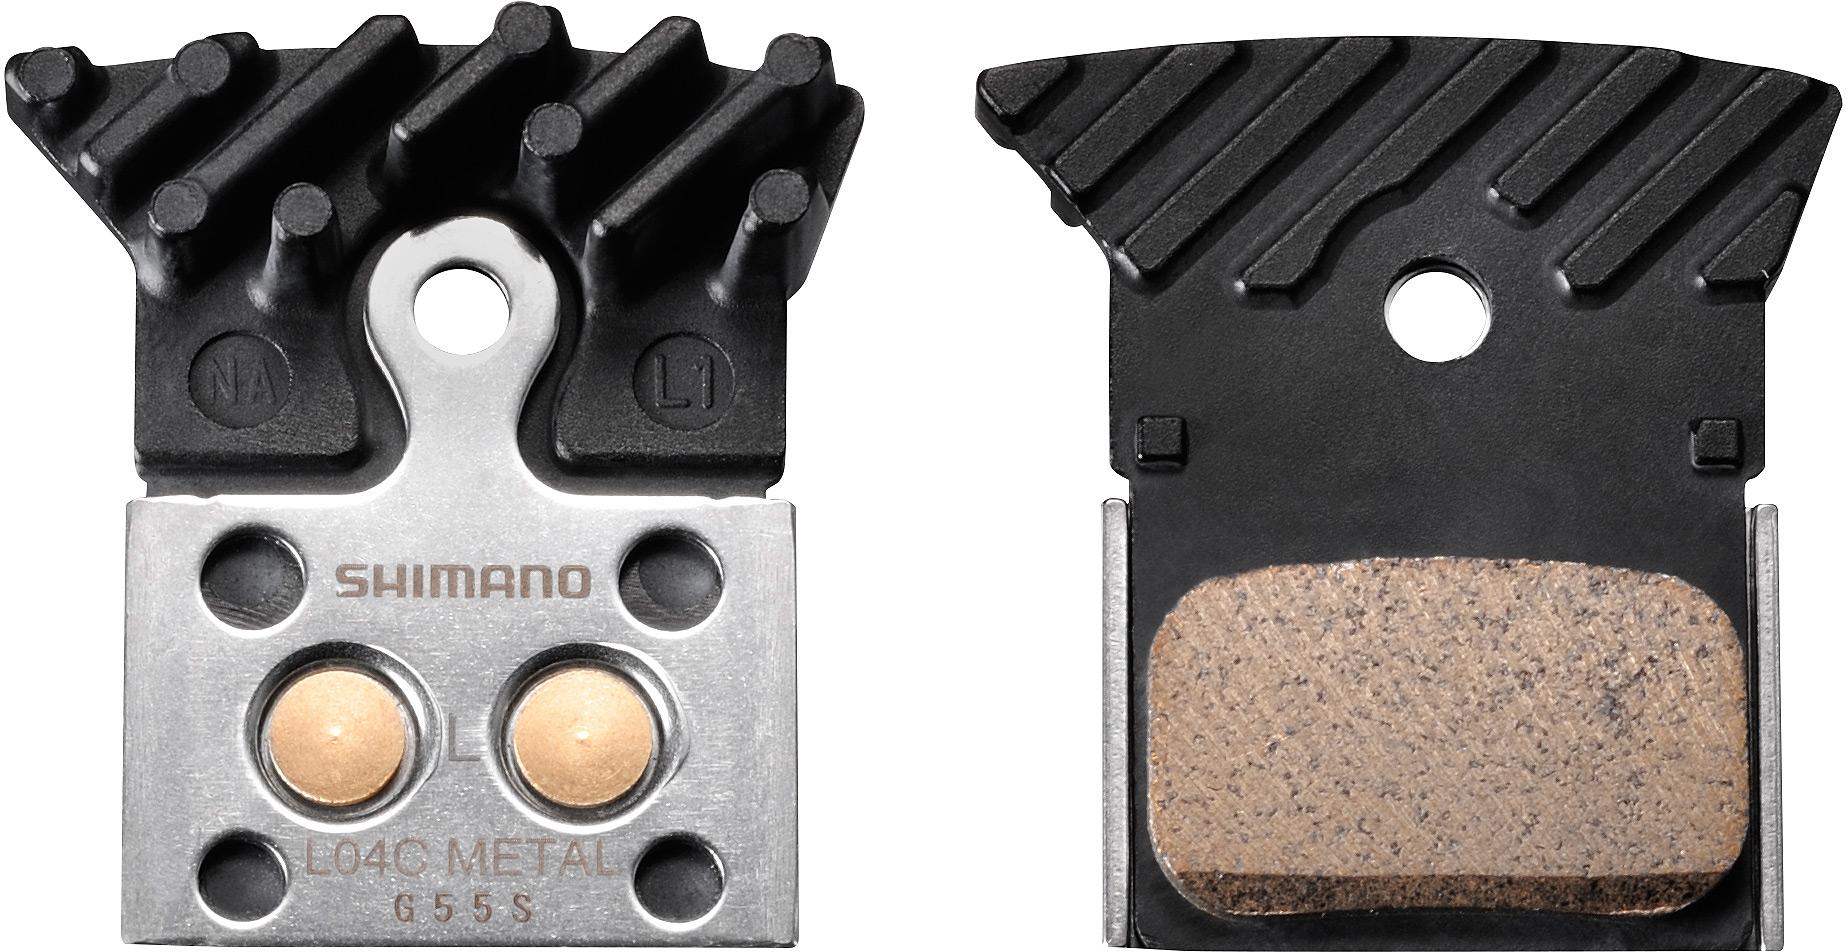 Shimano Road Disc Brake Pads (alloy Backed) - Black